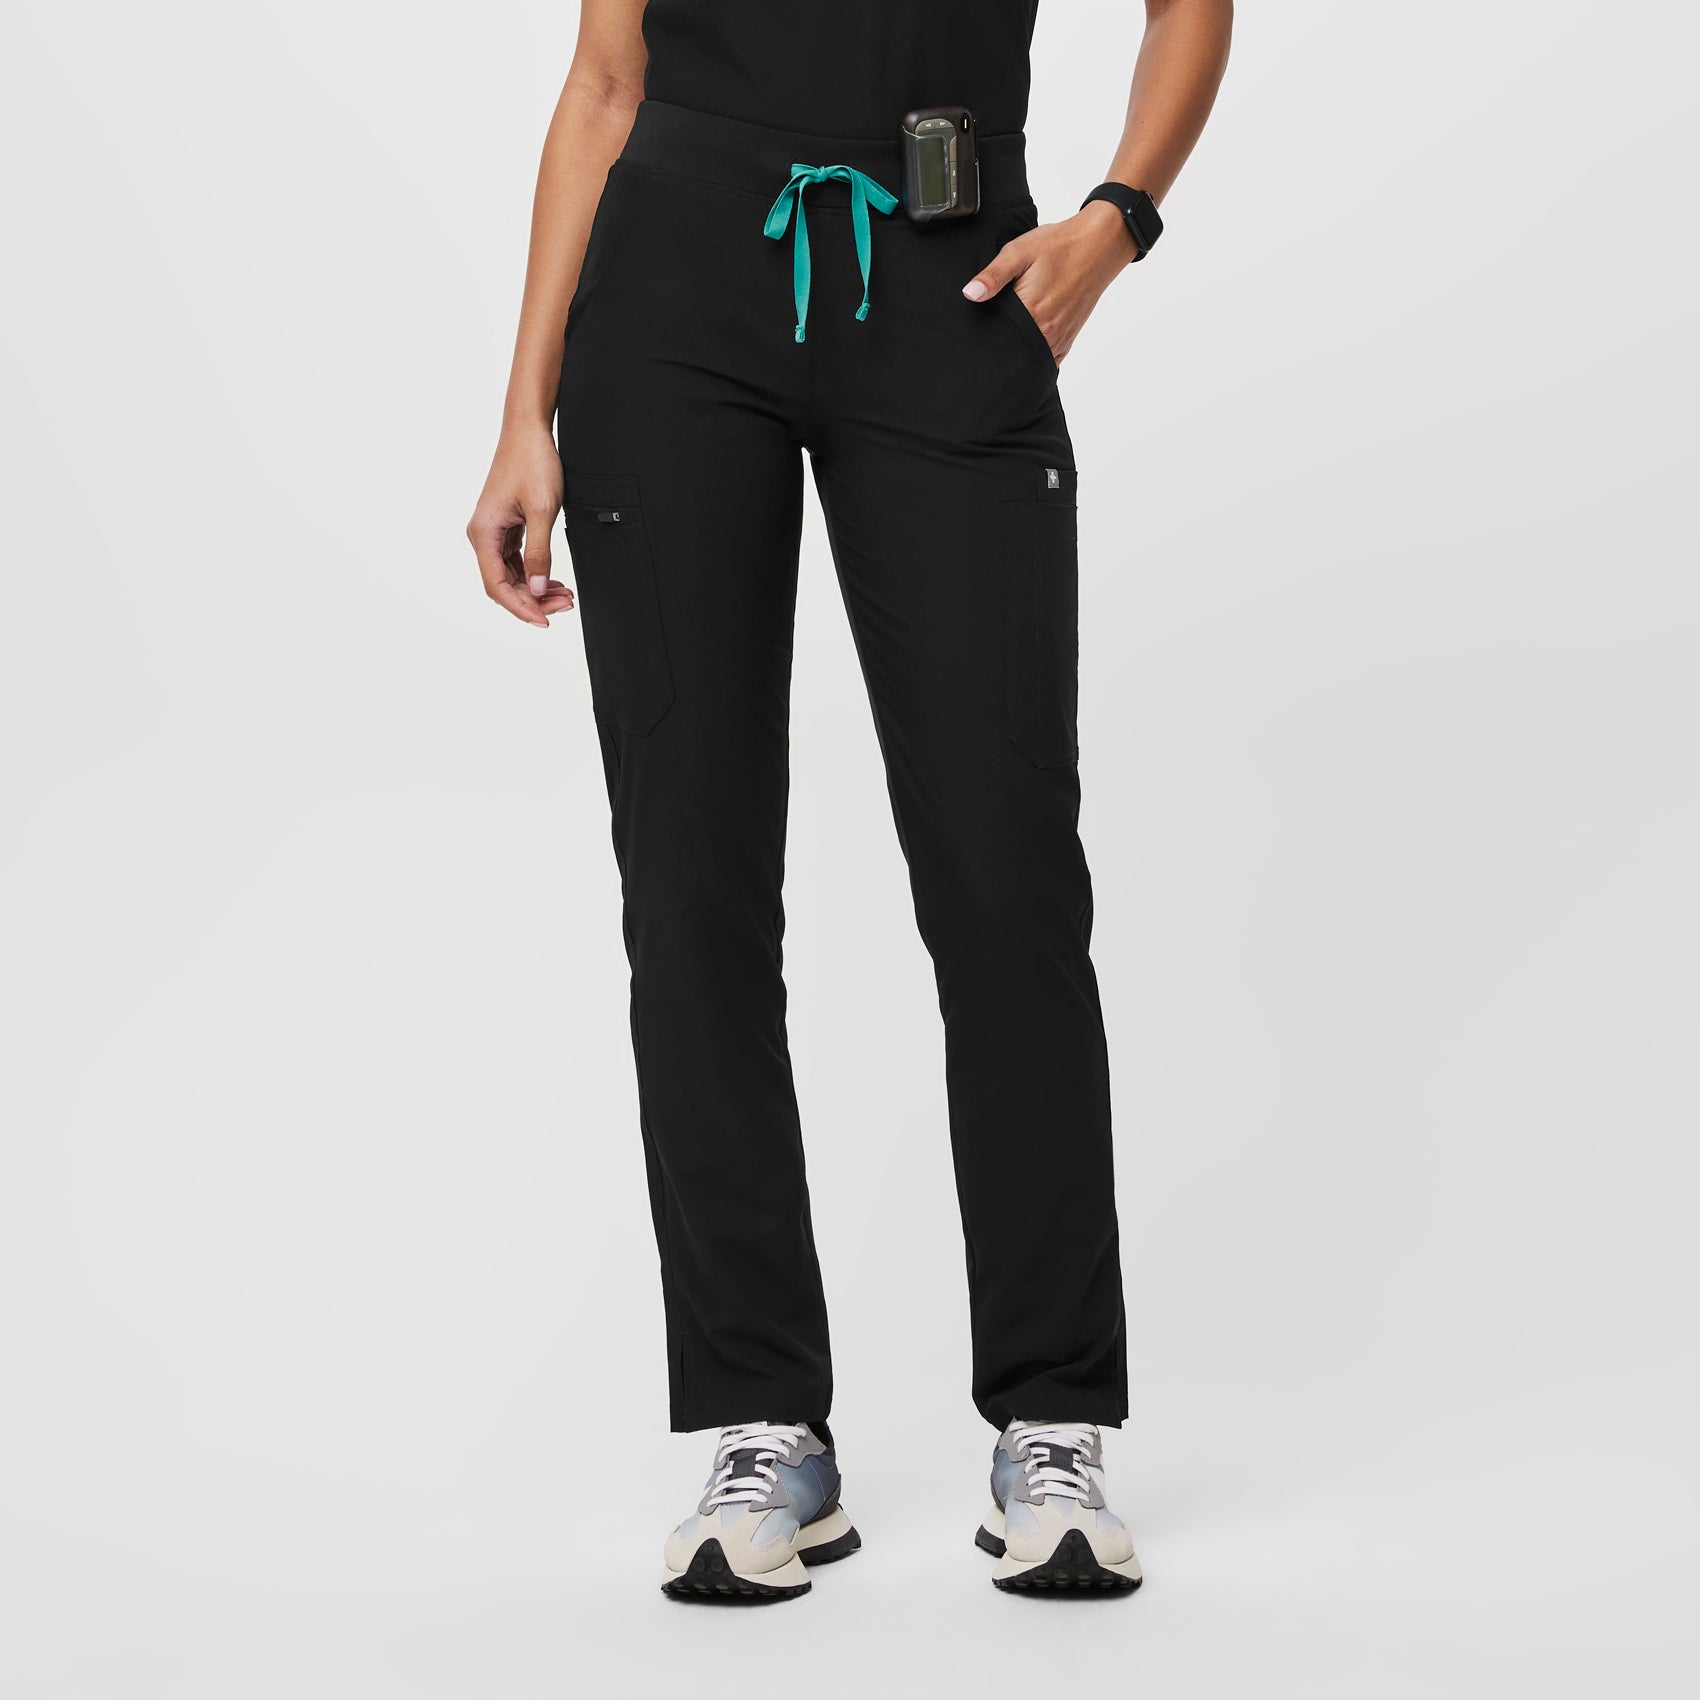 FIGS Zamora Jogger Style Scrub Pants for Women - Black, XL, Black, XL : Buy  Online at Best Price in KSA - Souq is now : Fashion